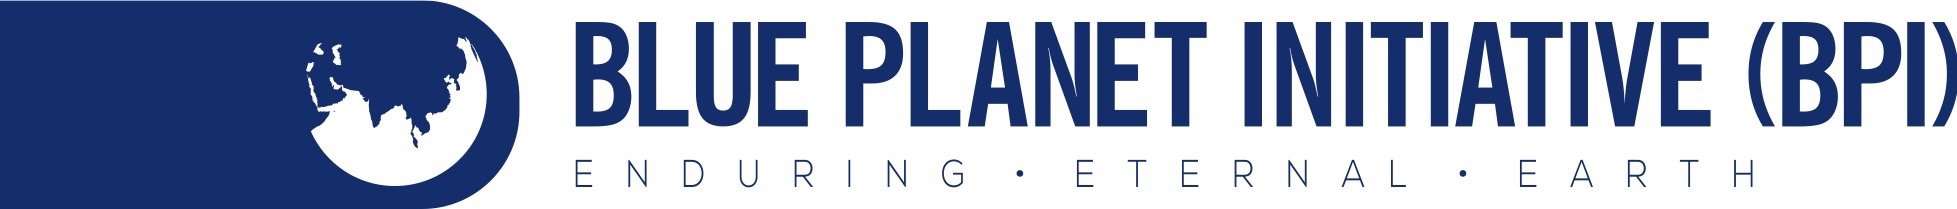 Blue Planet Initiative logo